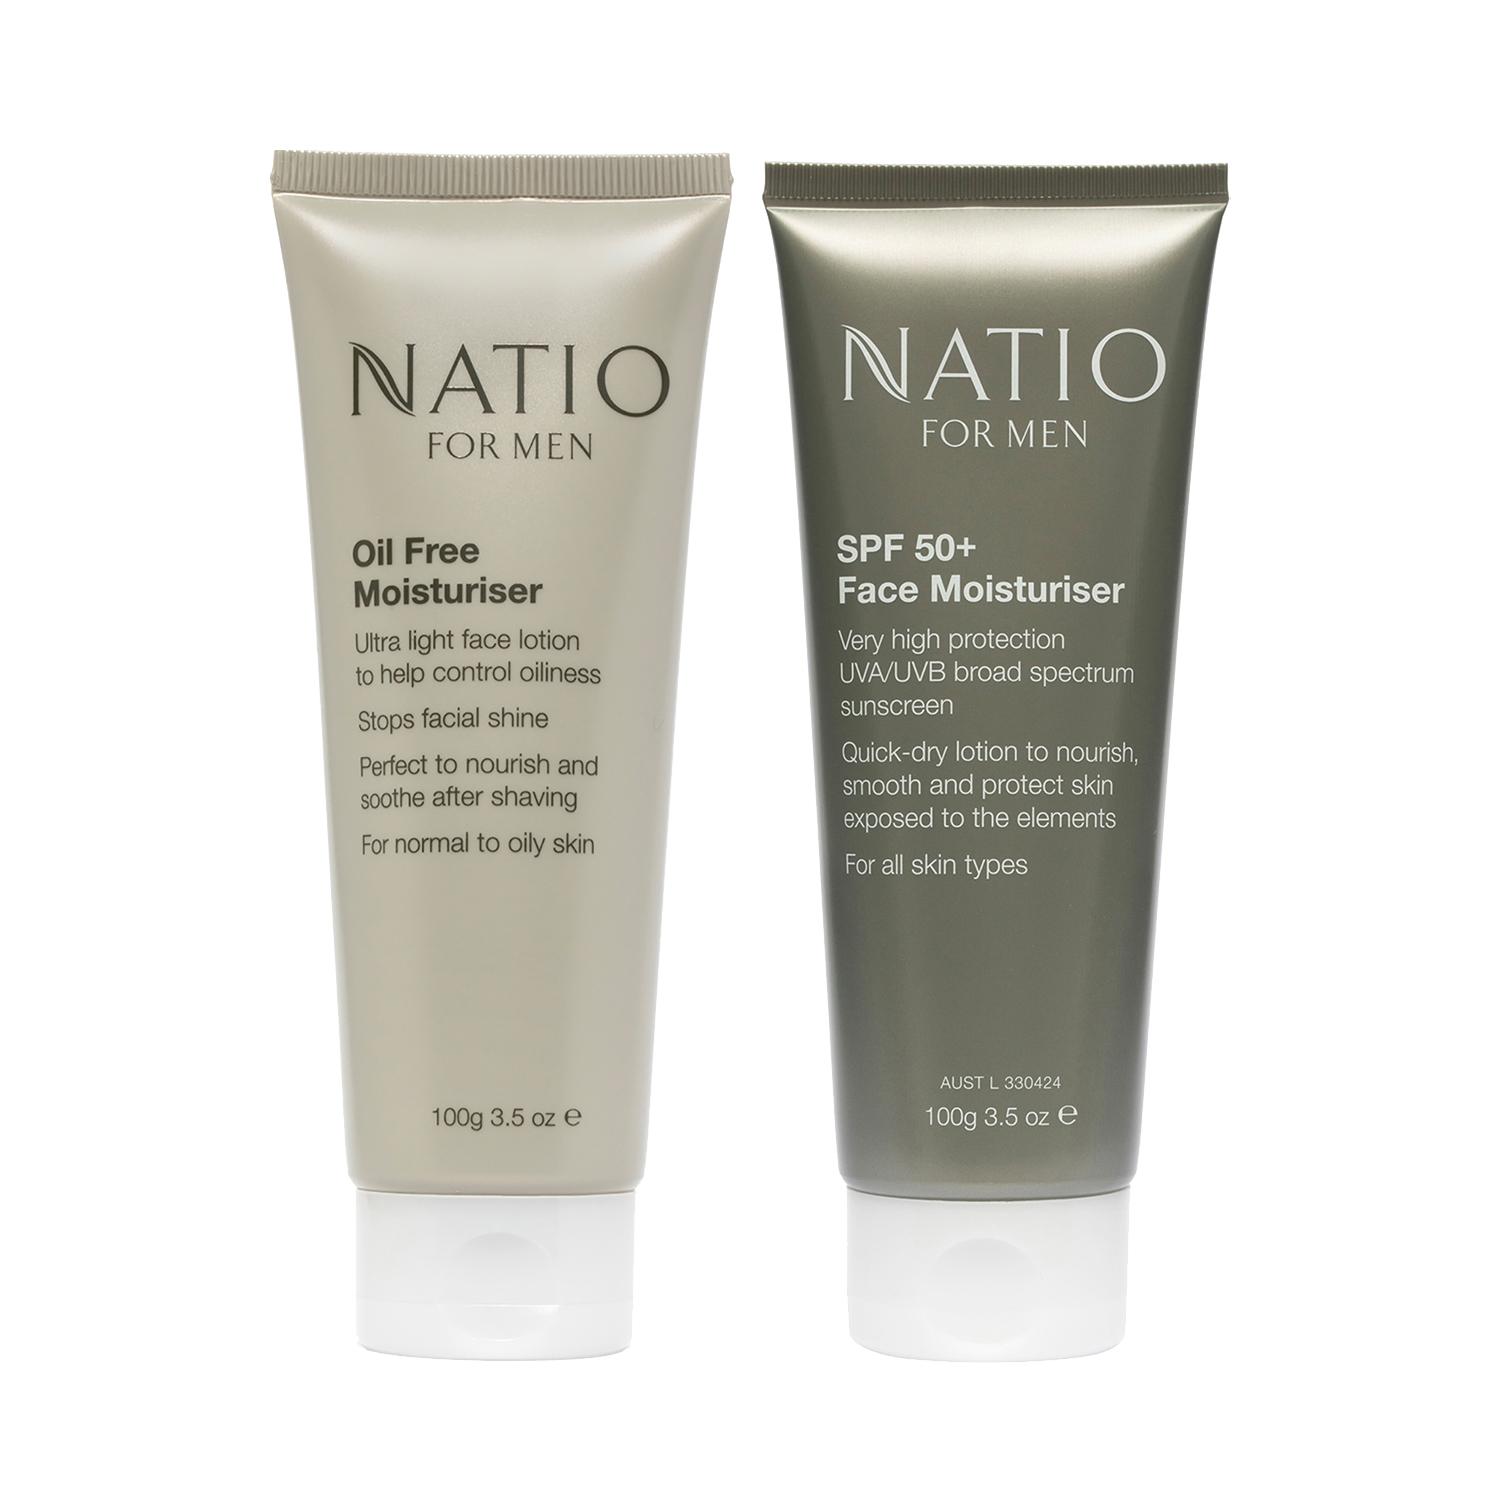 Natio | Natio For Men SPF 50+ Face Moisturiser (100 g) & Natio For Men Oil Free Moisturiser (100 g) Combo